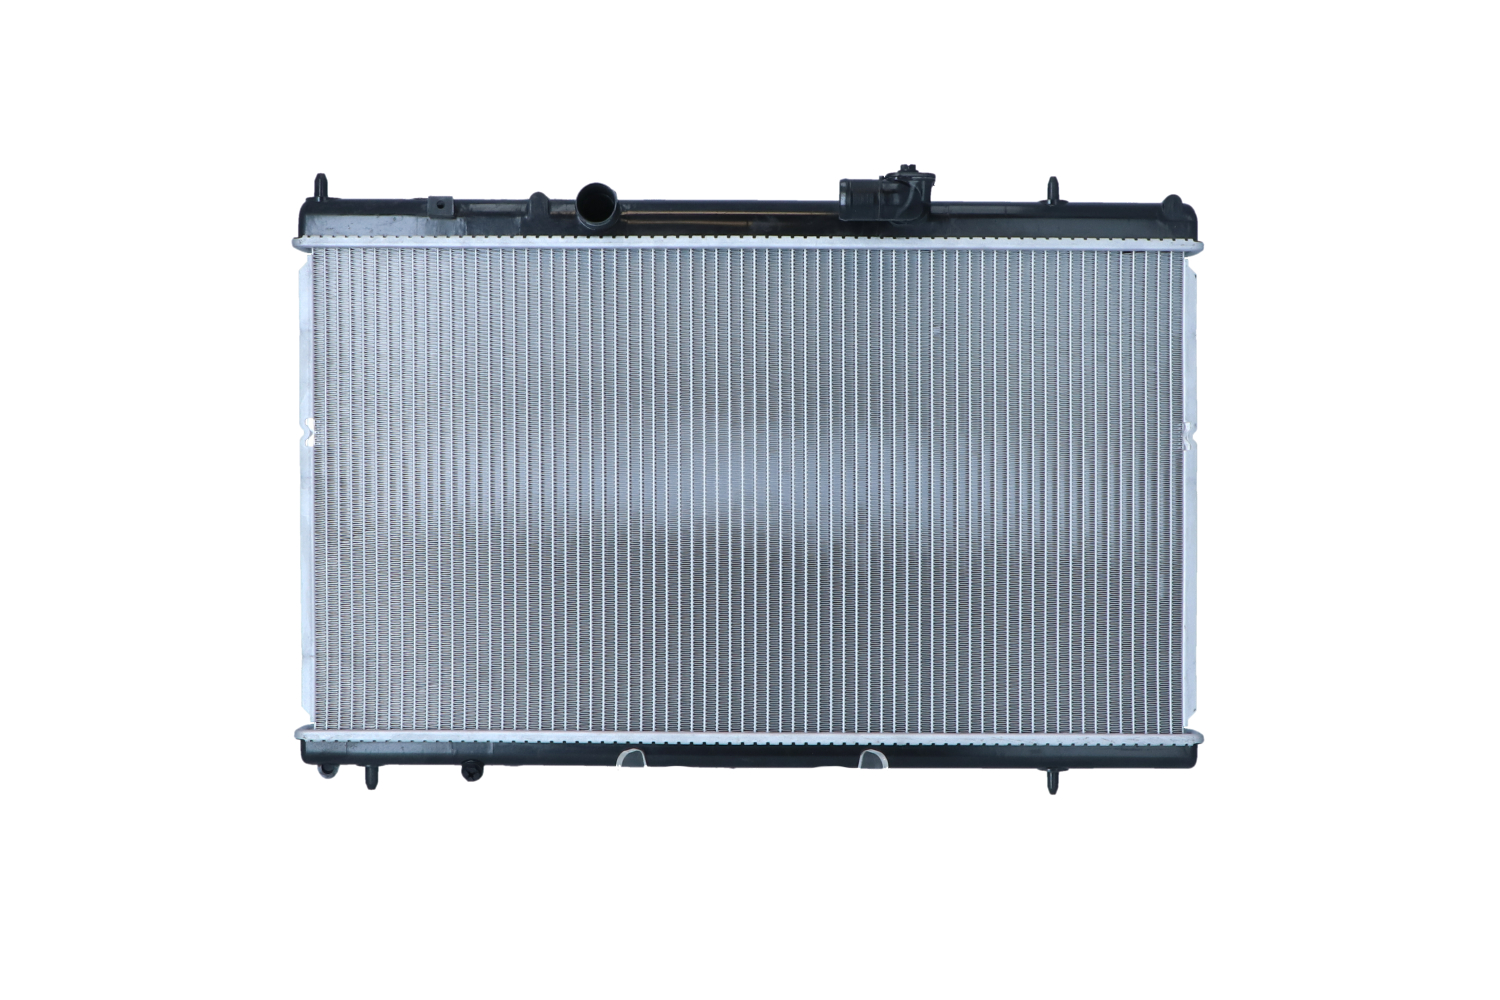 NRF 50466 Engine radiator Aluminium, 688 x 380 x 32 mm, Brazed cooling fins